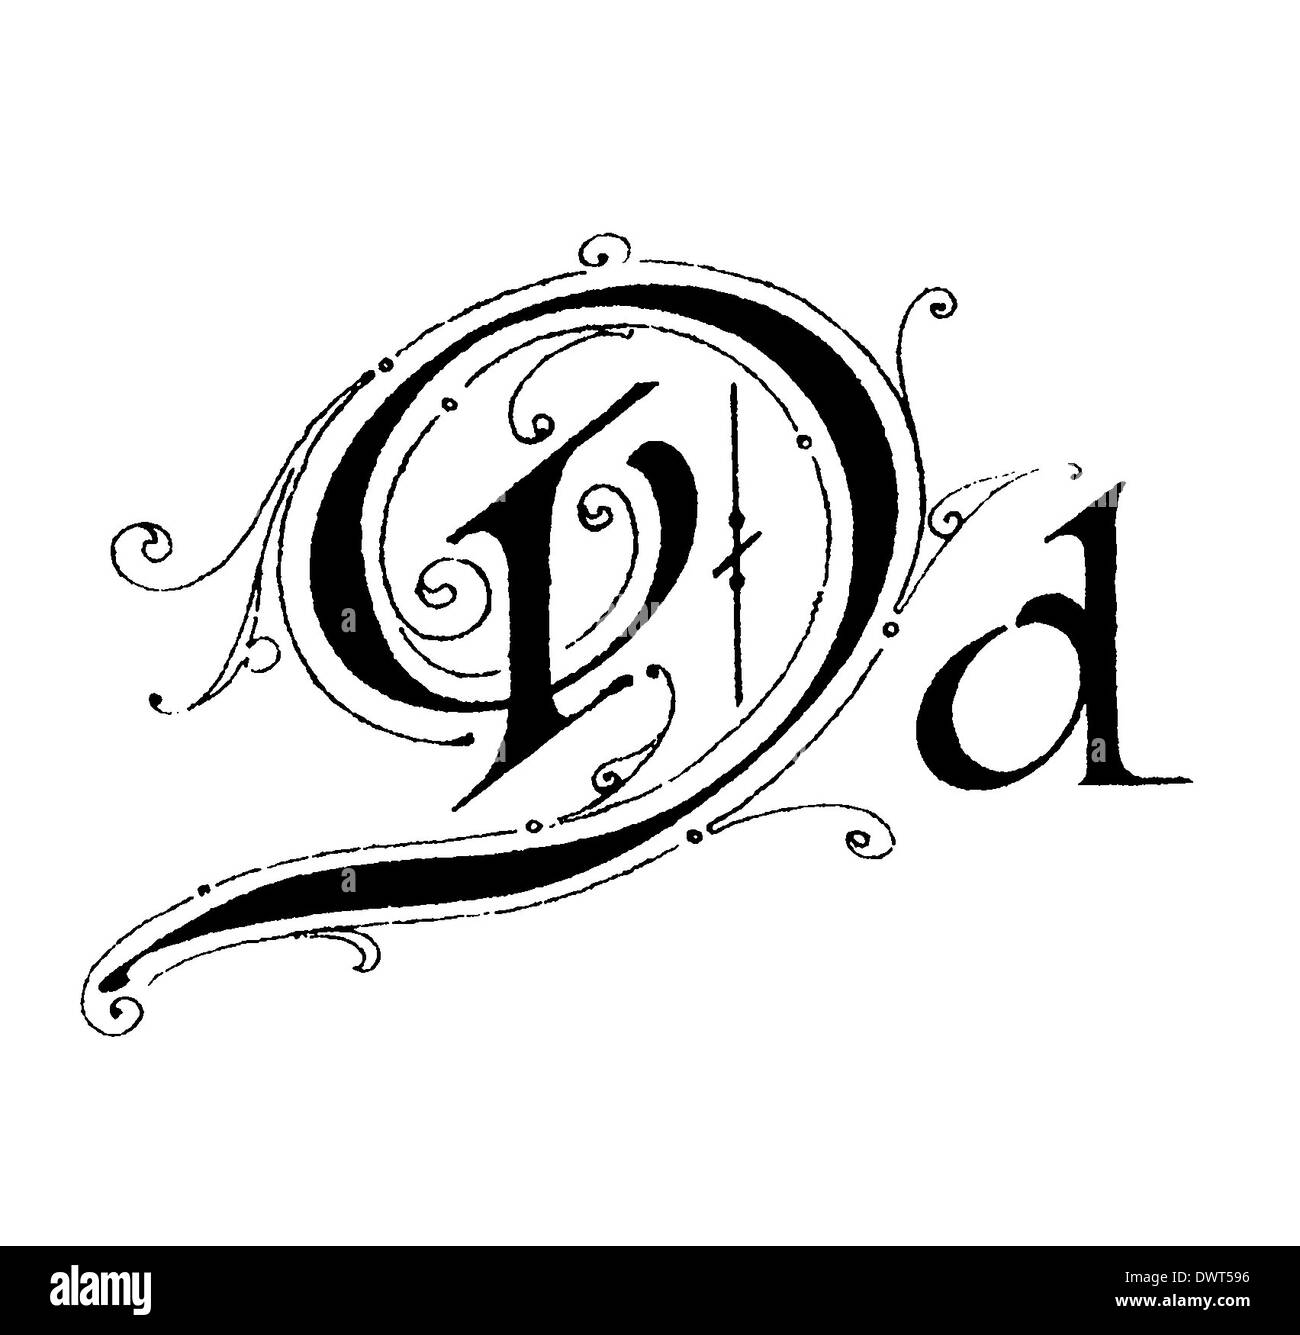 Alphabet character, letter D Stock Photo